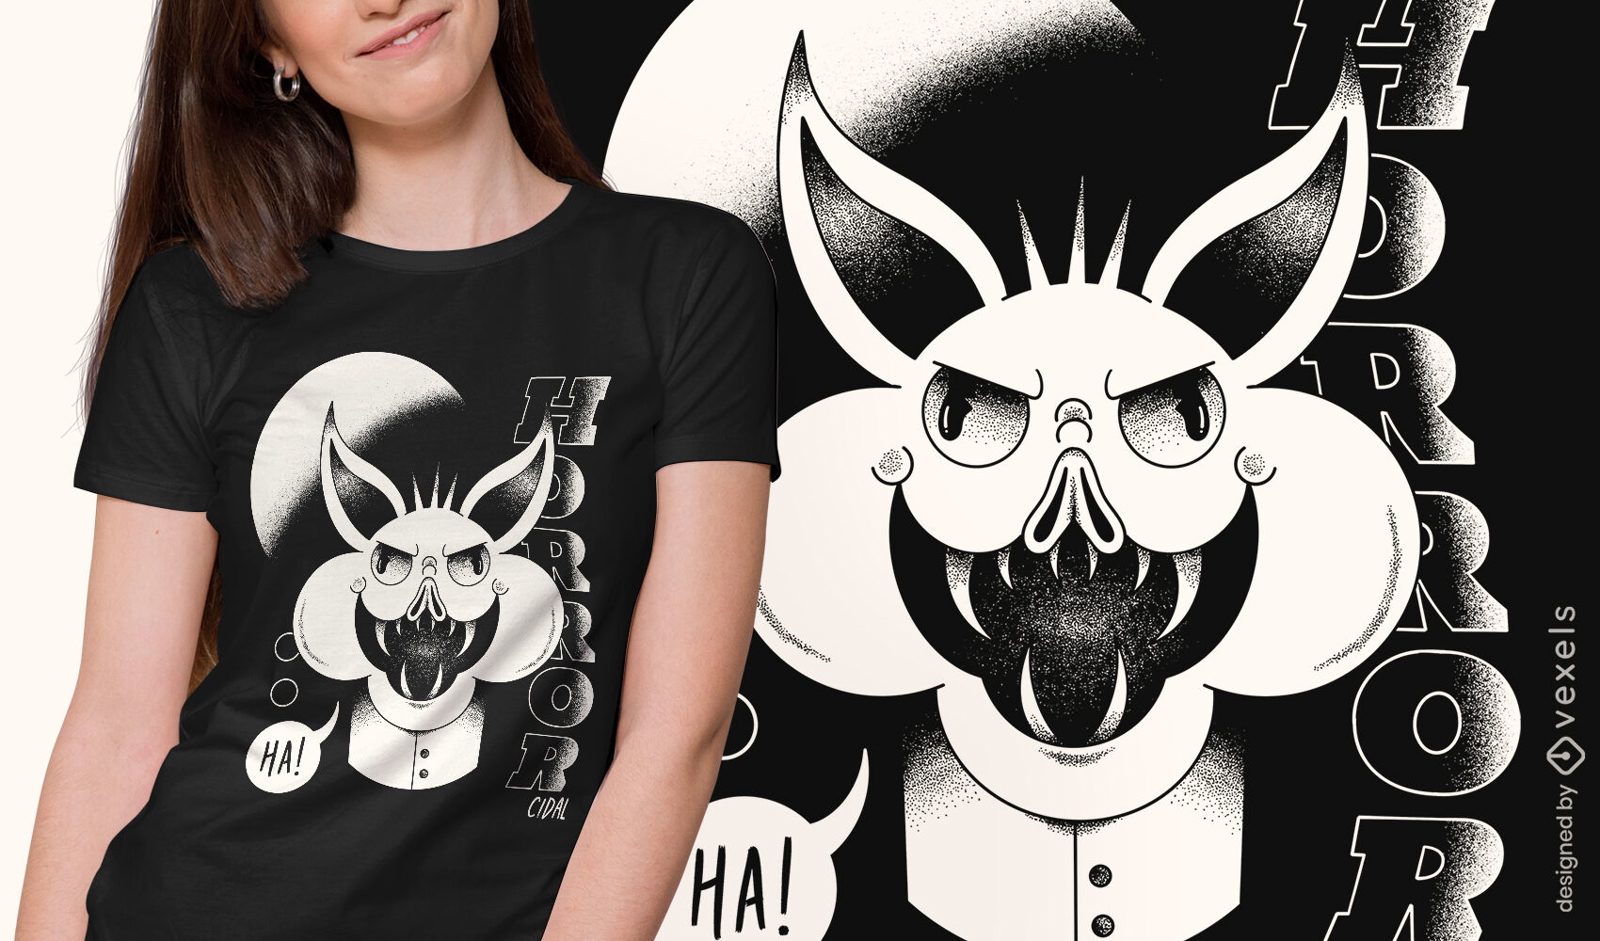 Scary monster pig t-shirt design